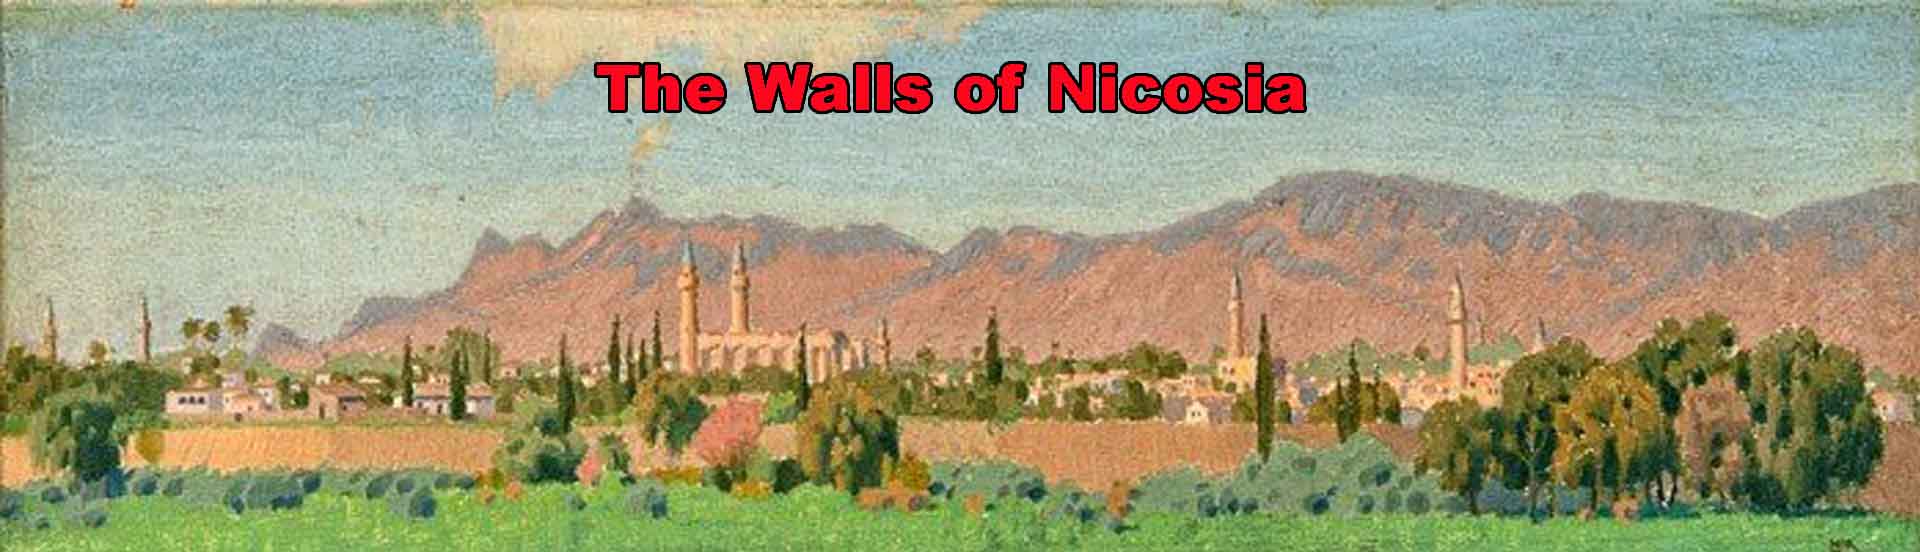 The Walls of Nicosia